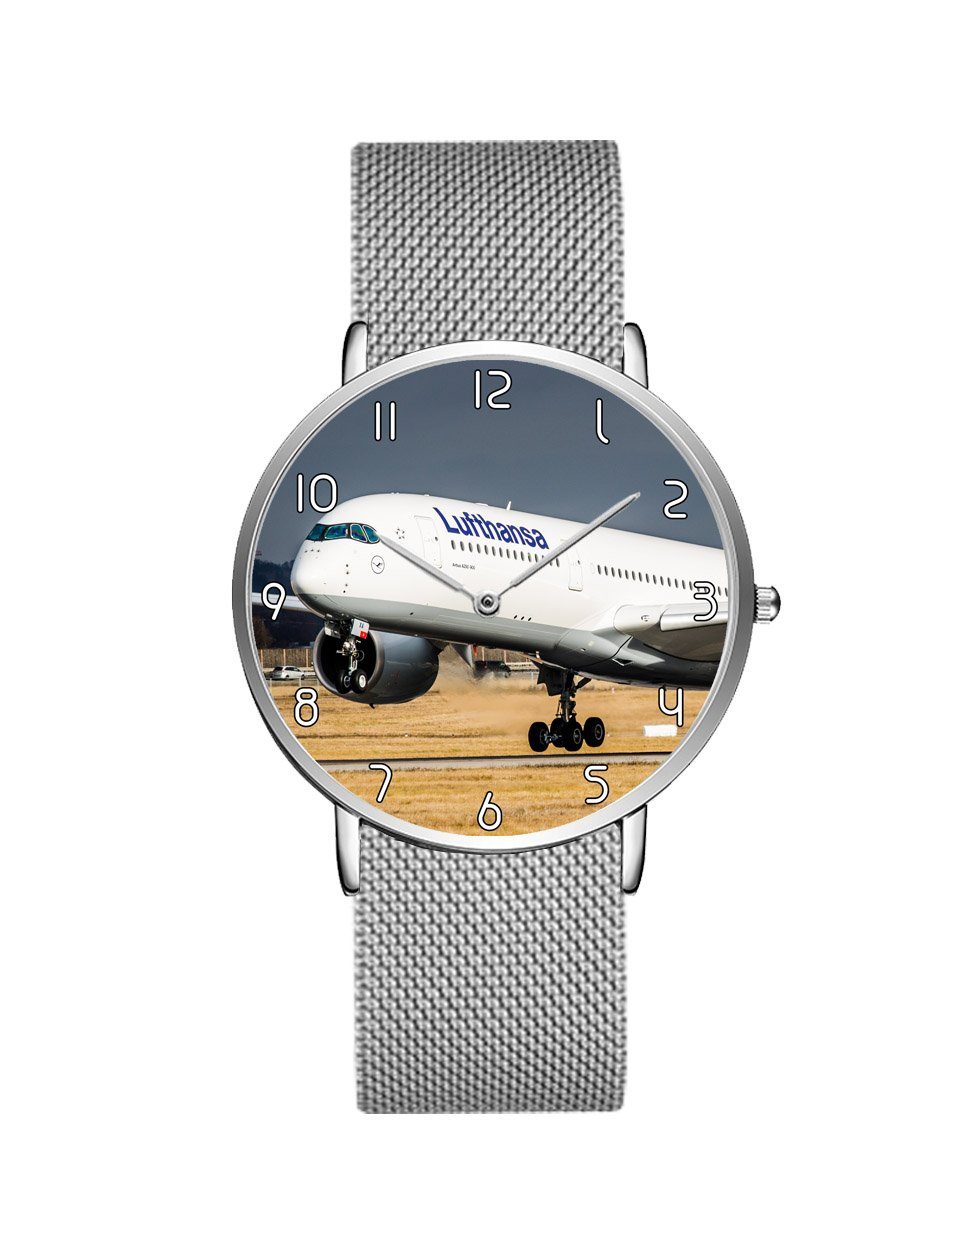 Lutfhansa A350 Printed Stainless Steel Strap Watches Aviation Shop Silver & Silver Stainless Steel Strap 